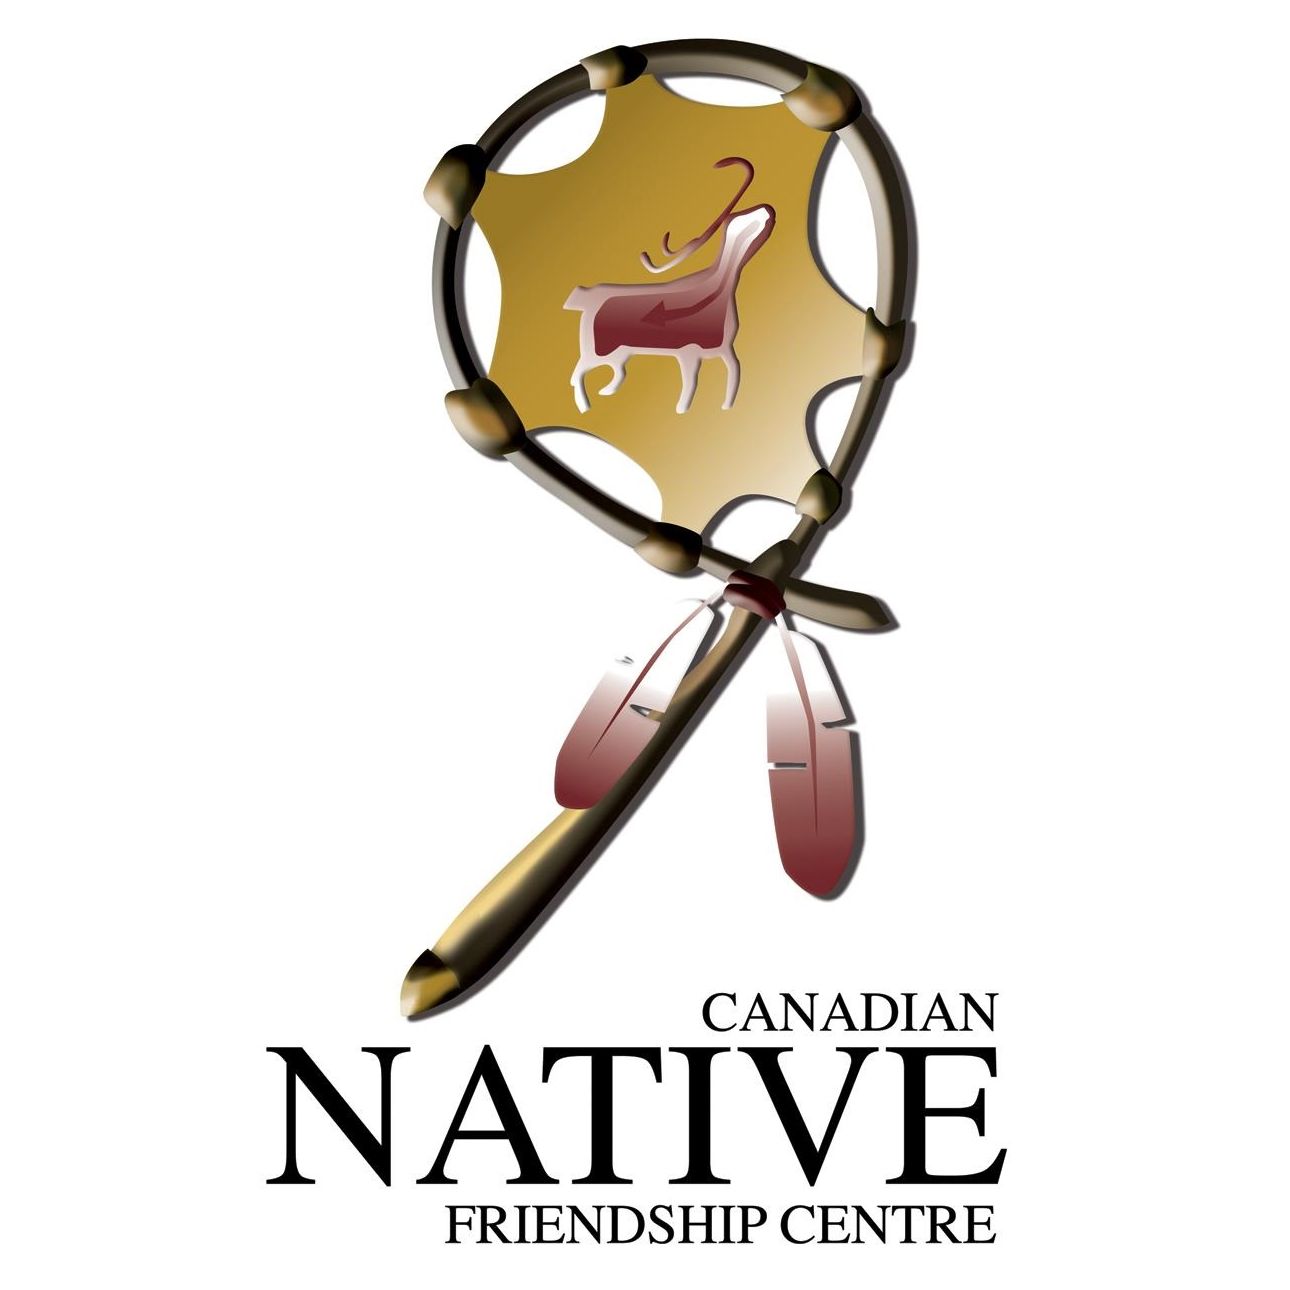 Native American Organizations in Calgary Alberta - Canadian Native Friendship Centre